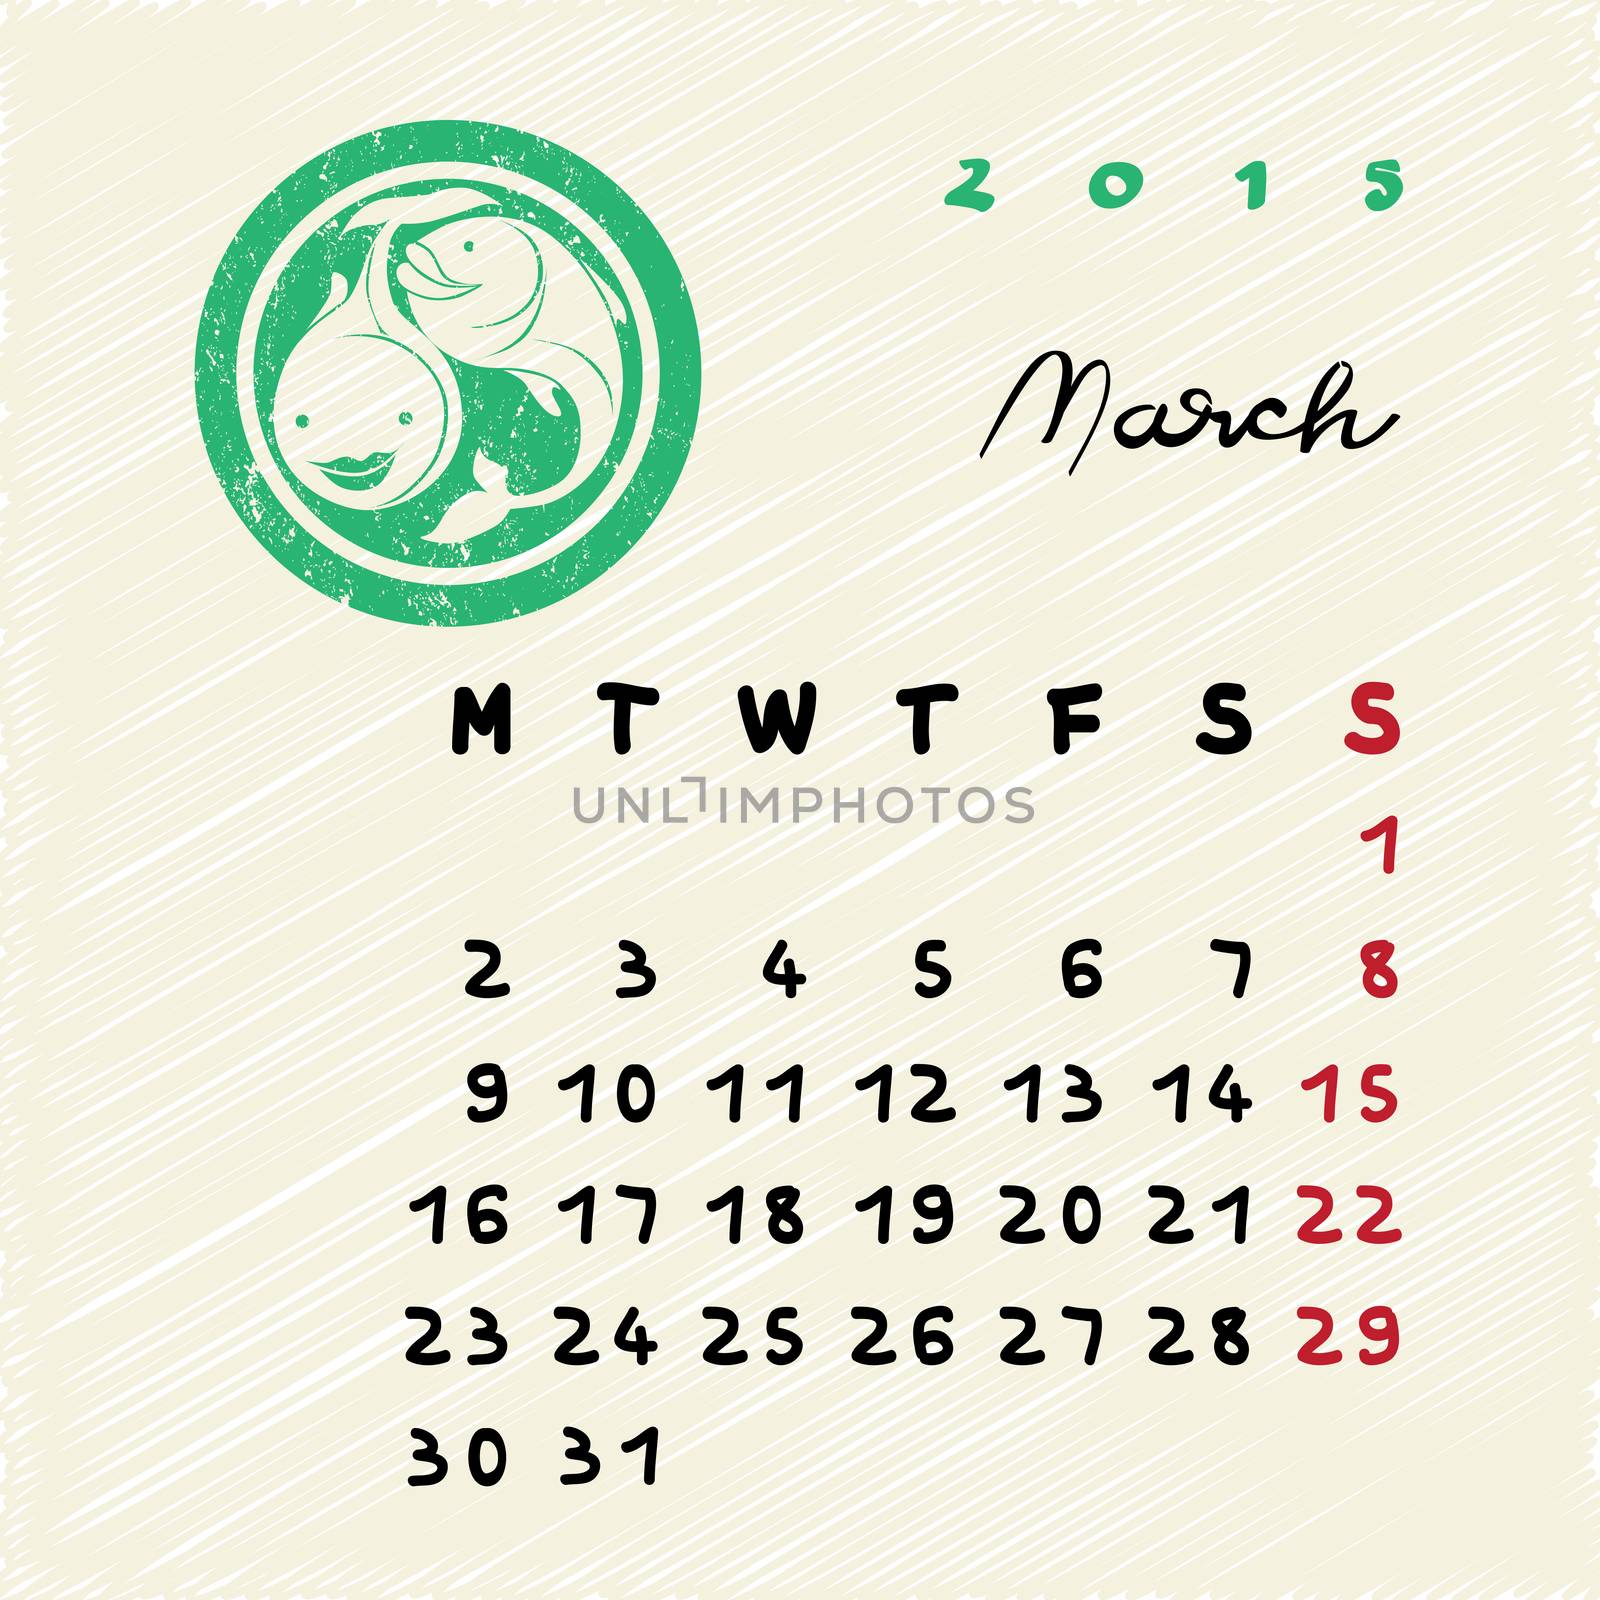 march 2015 zodiac by catacos